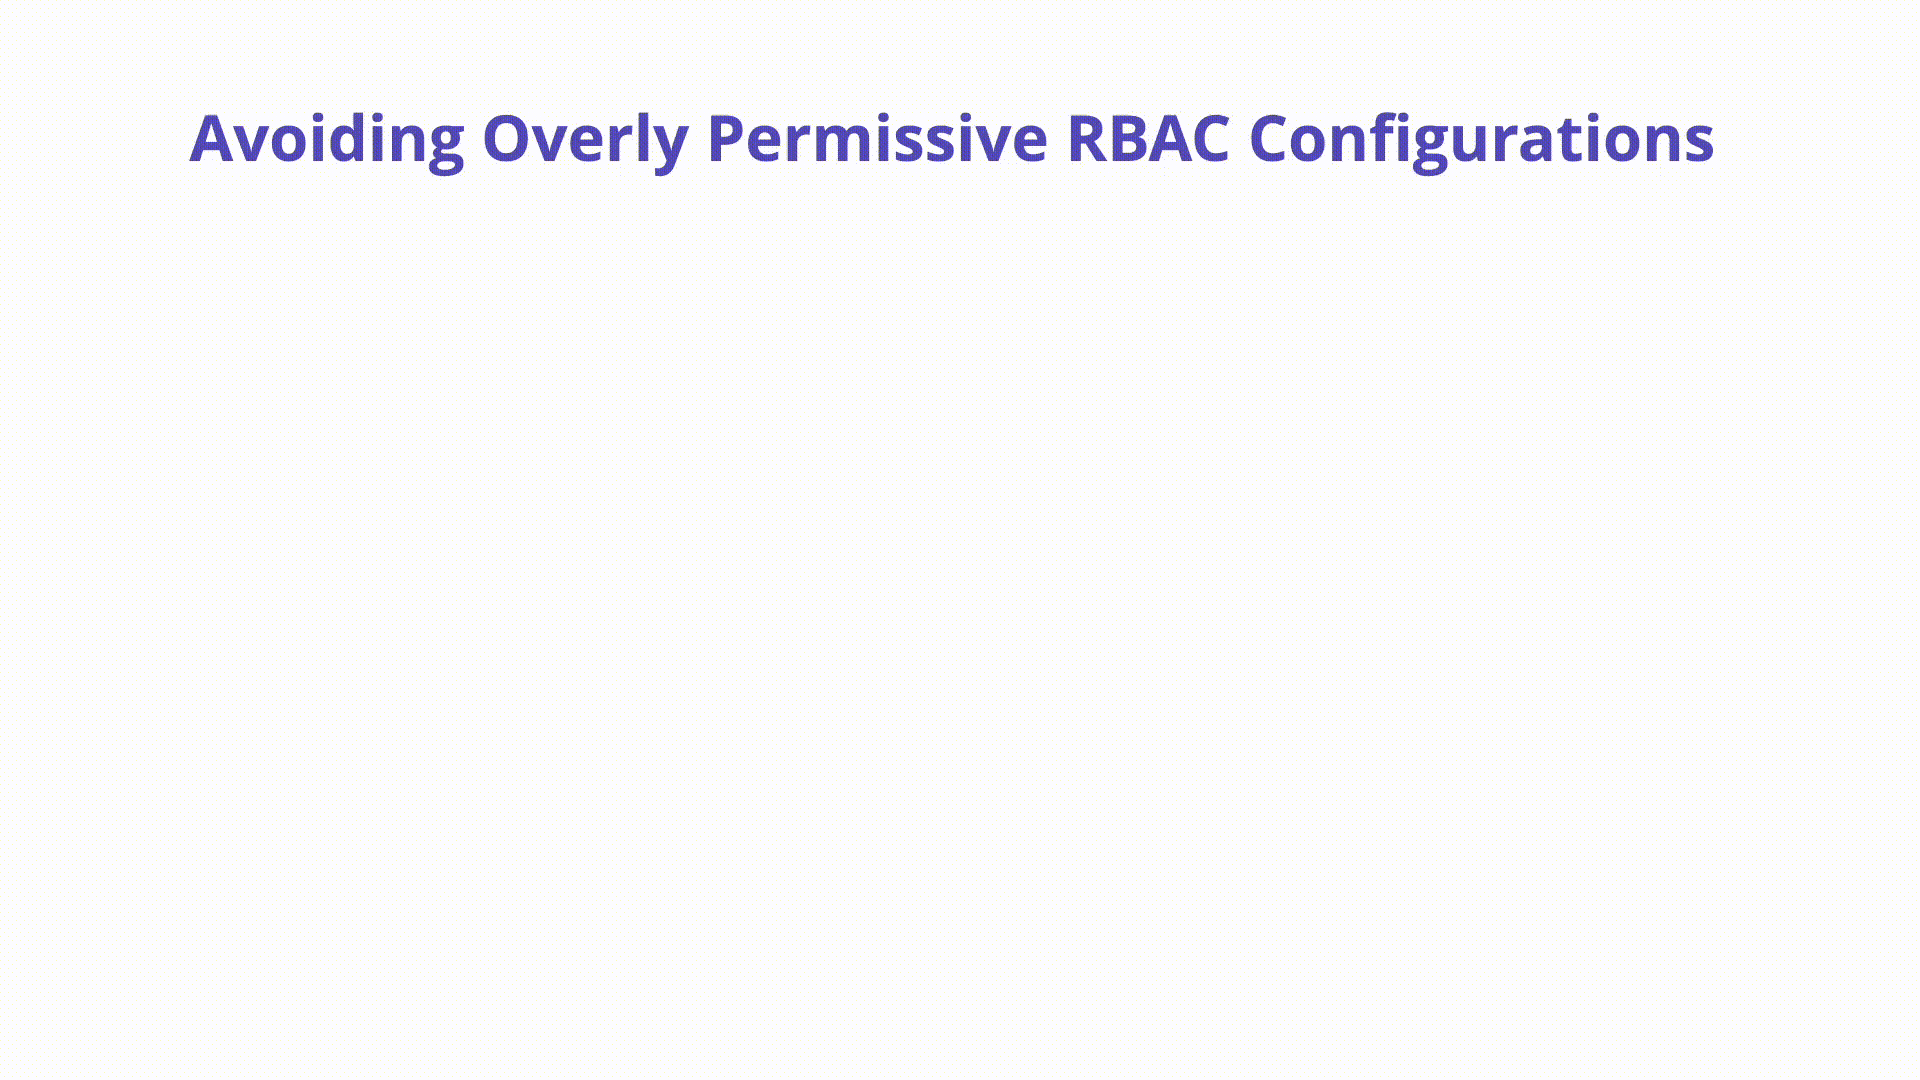 Overly Permissive RBAC -
Mitigations